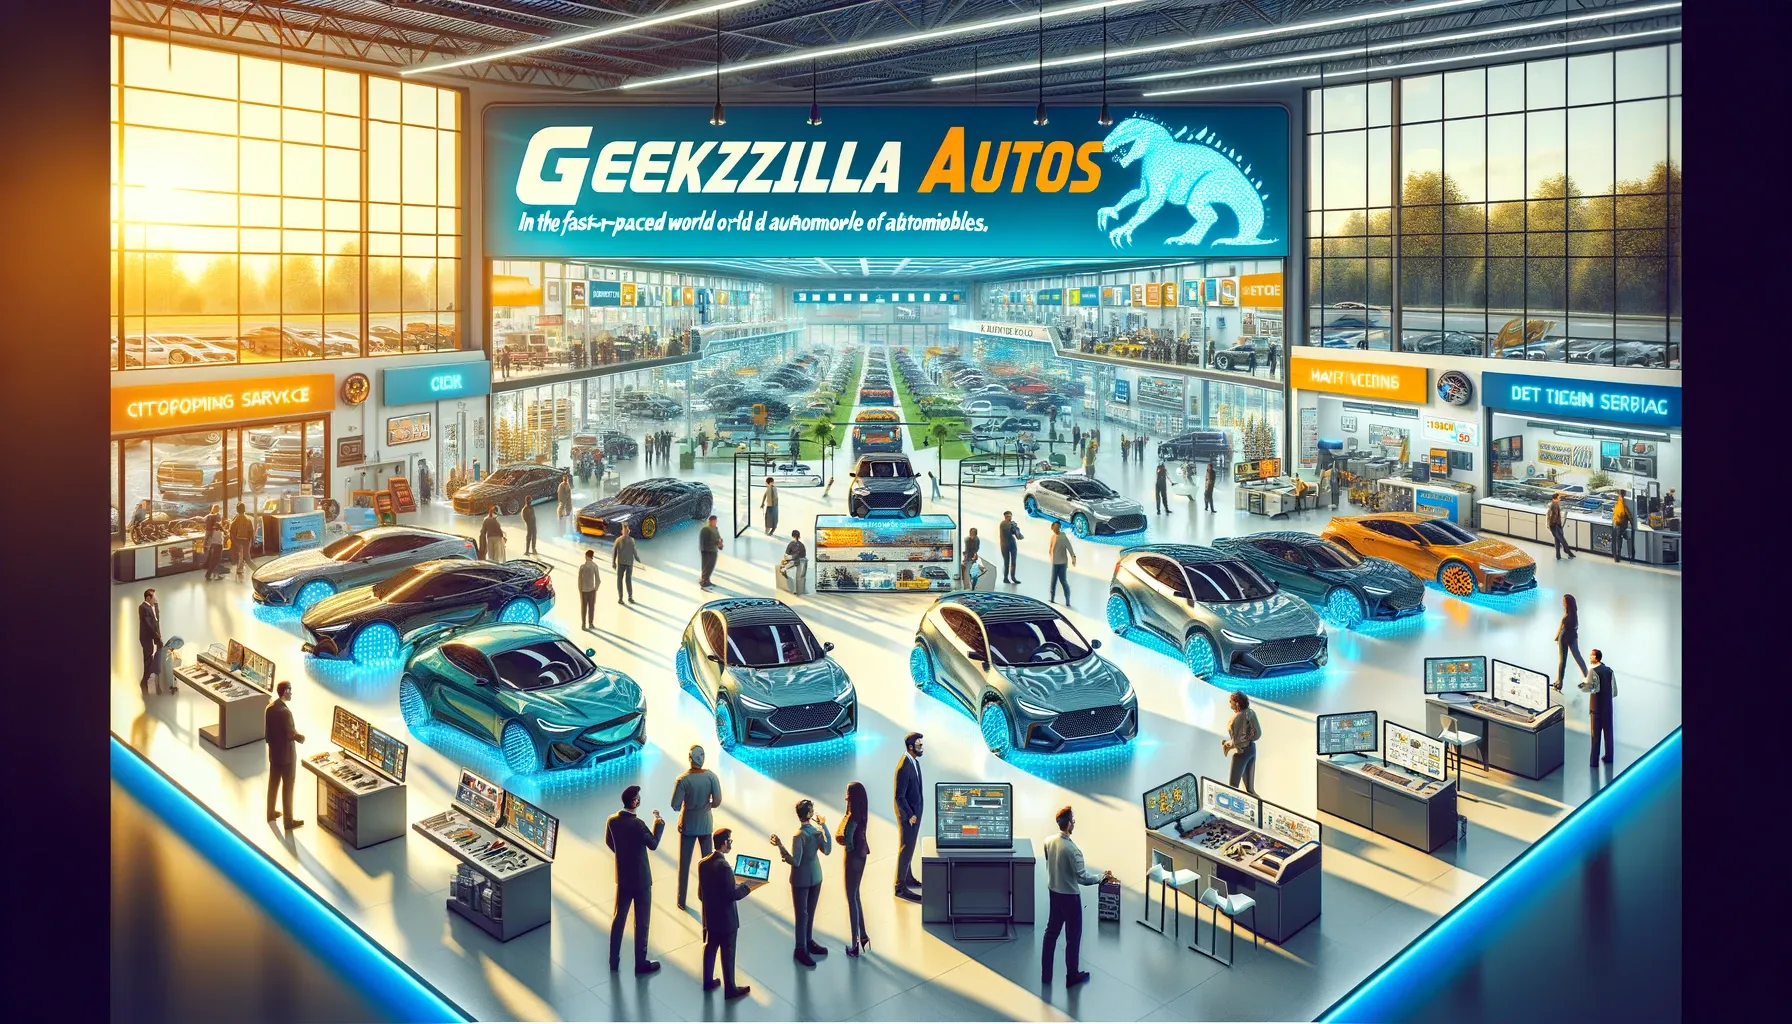 Geekzilla Autos: Leading the Auto Industry Since 1990